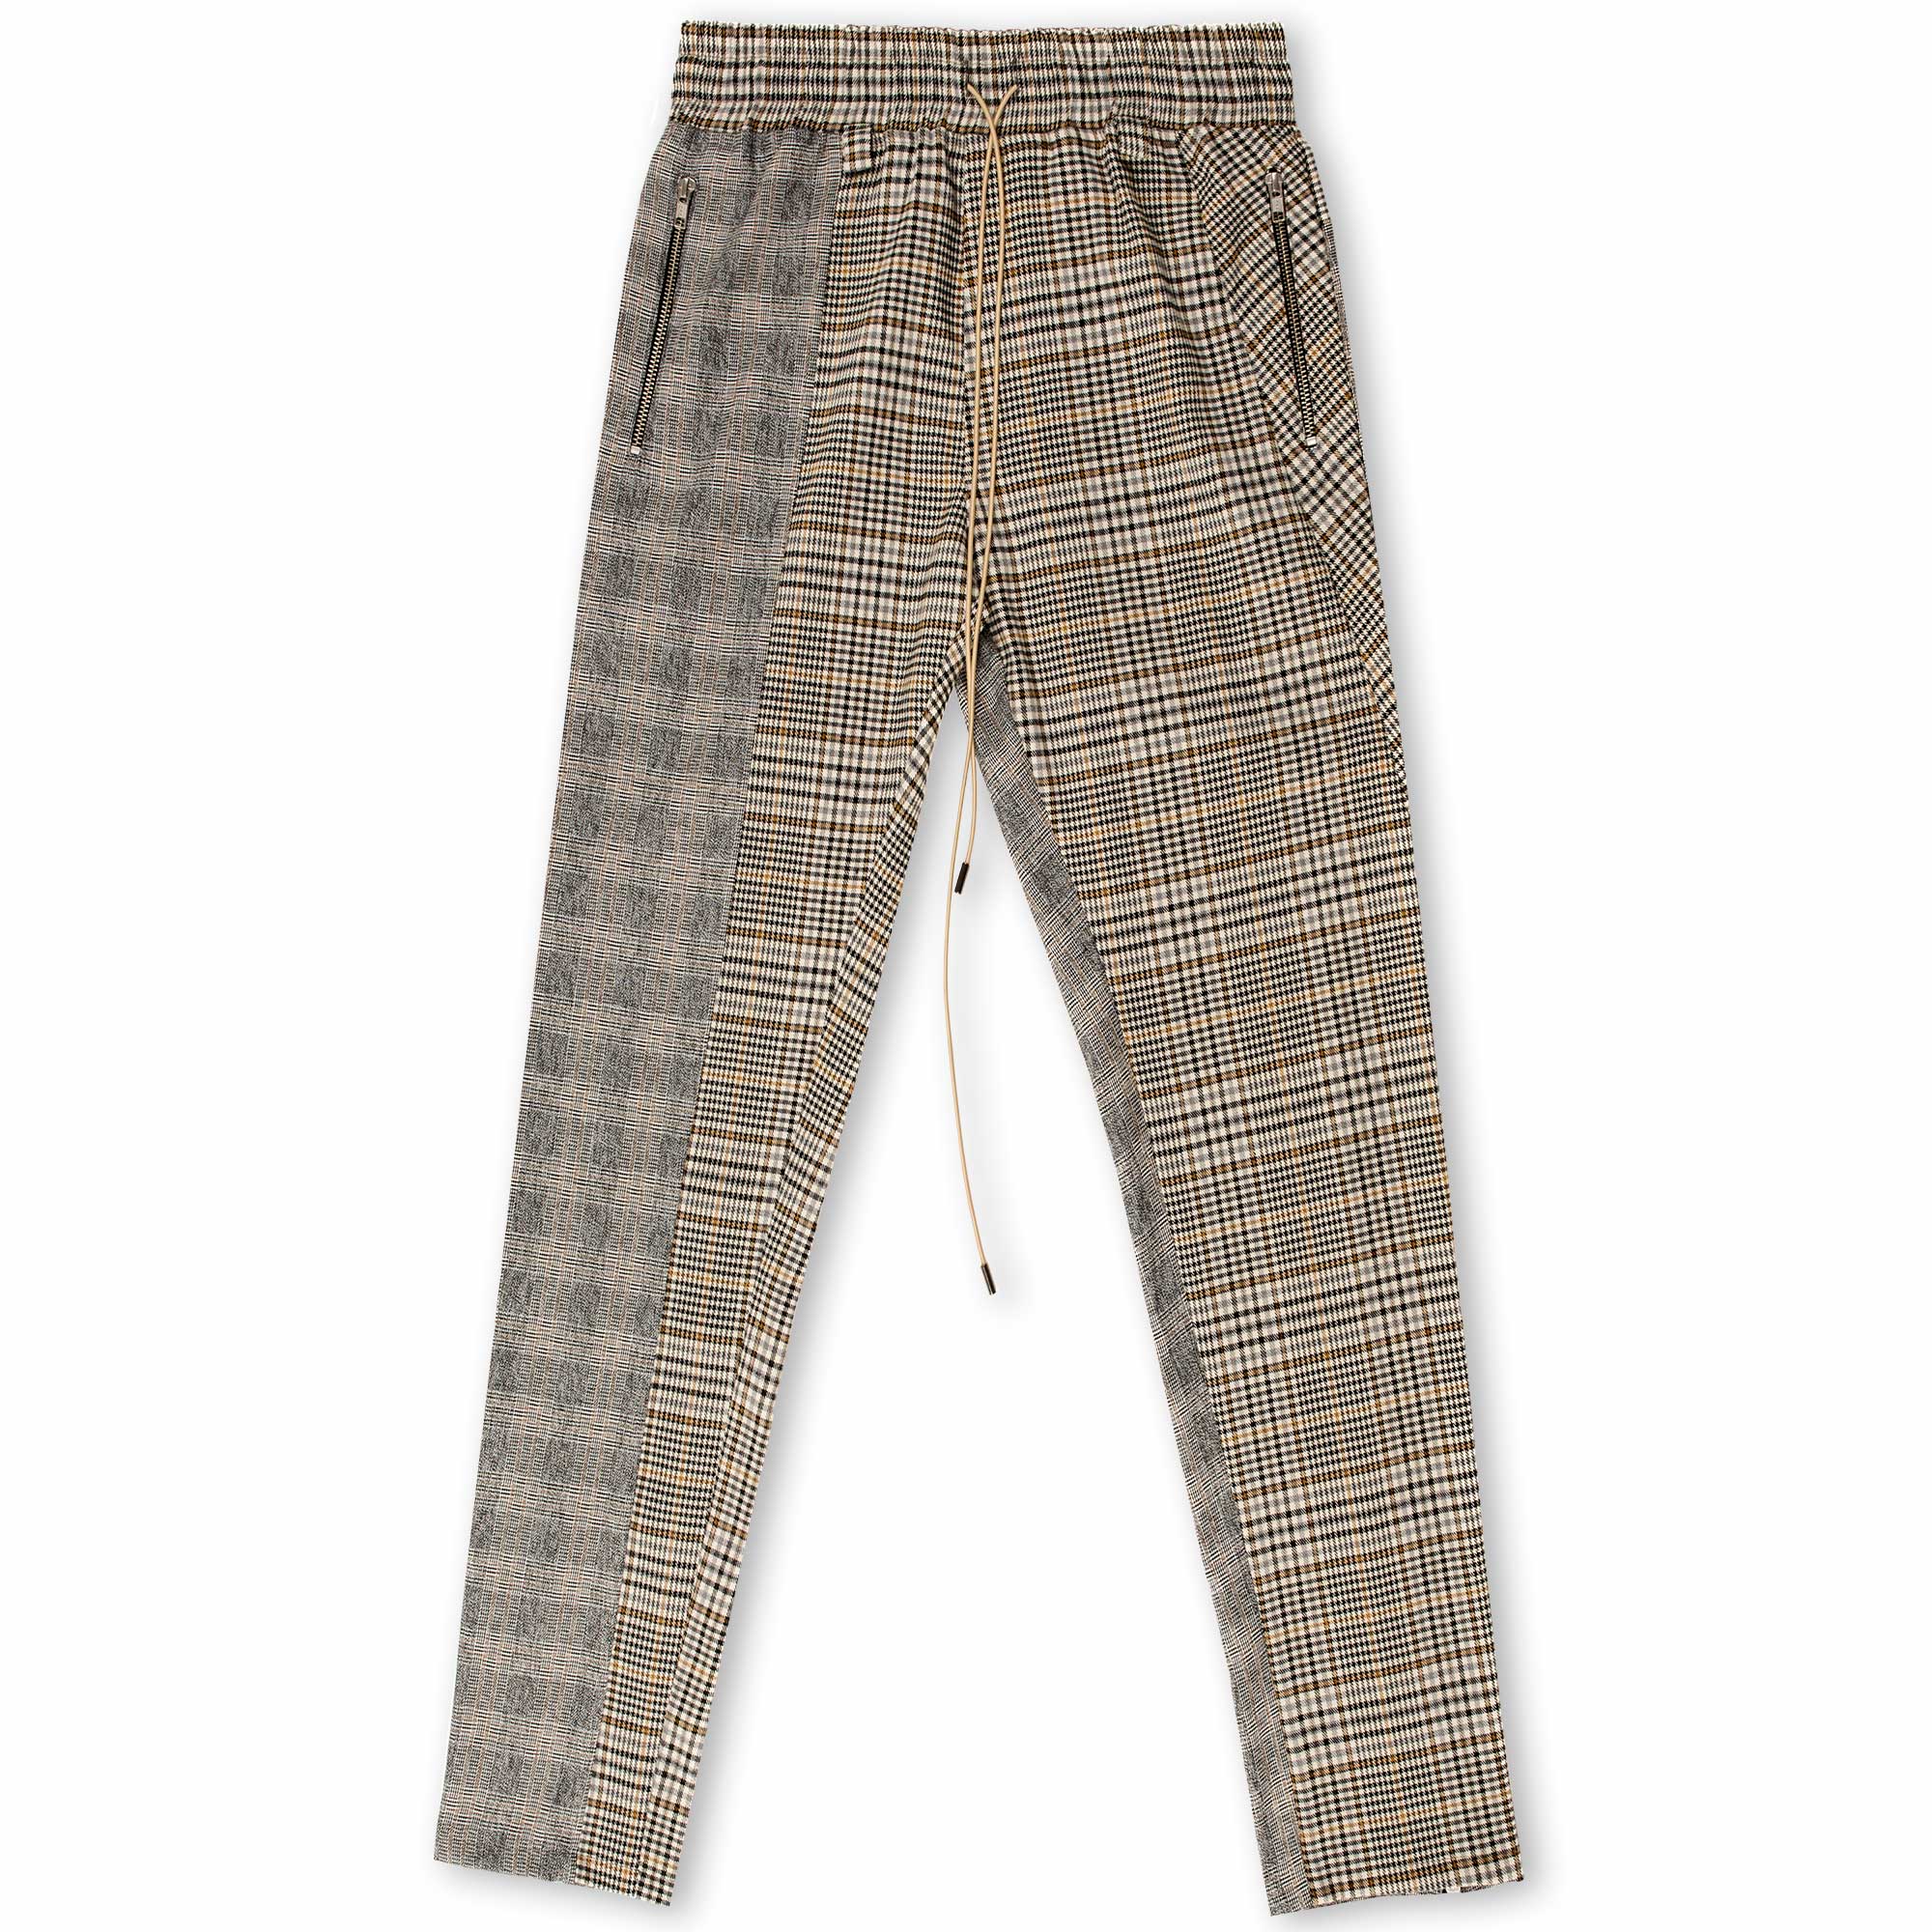 50/50 split pants - Beige/Grey